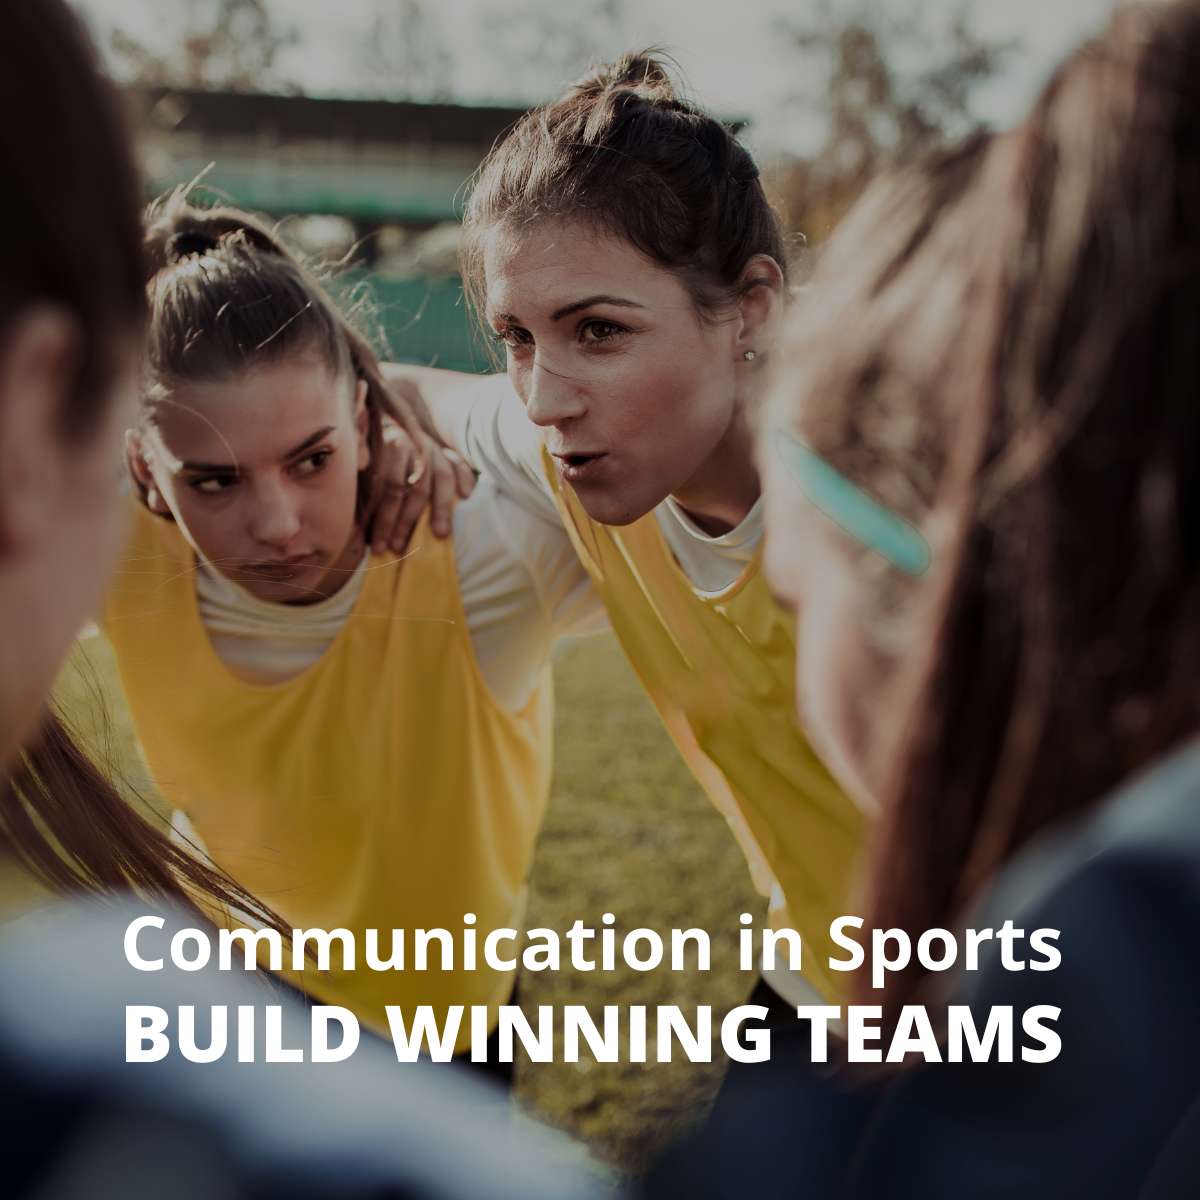 Communication in Sports: Build Winning Teams